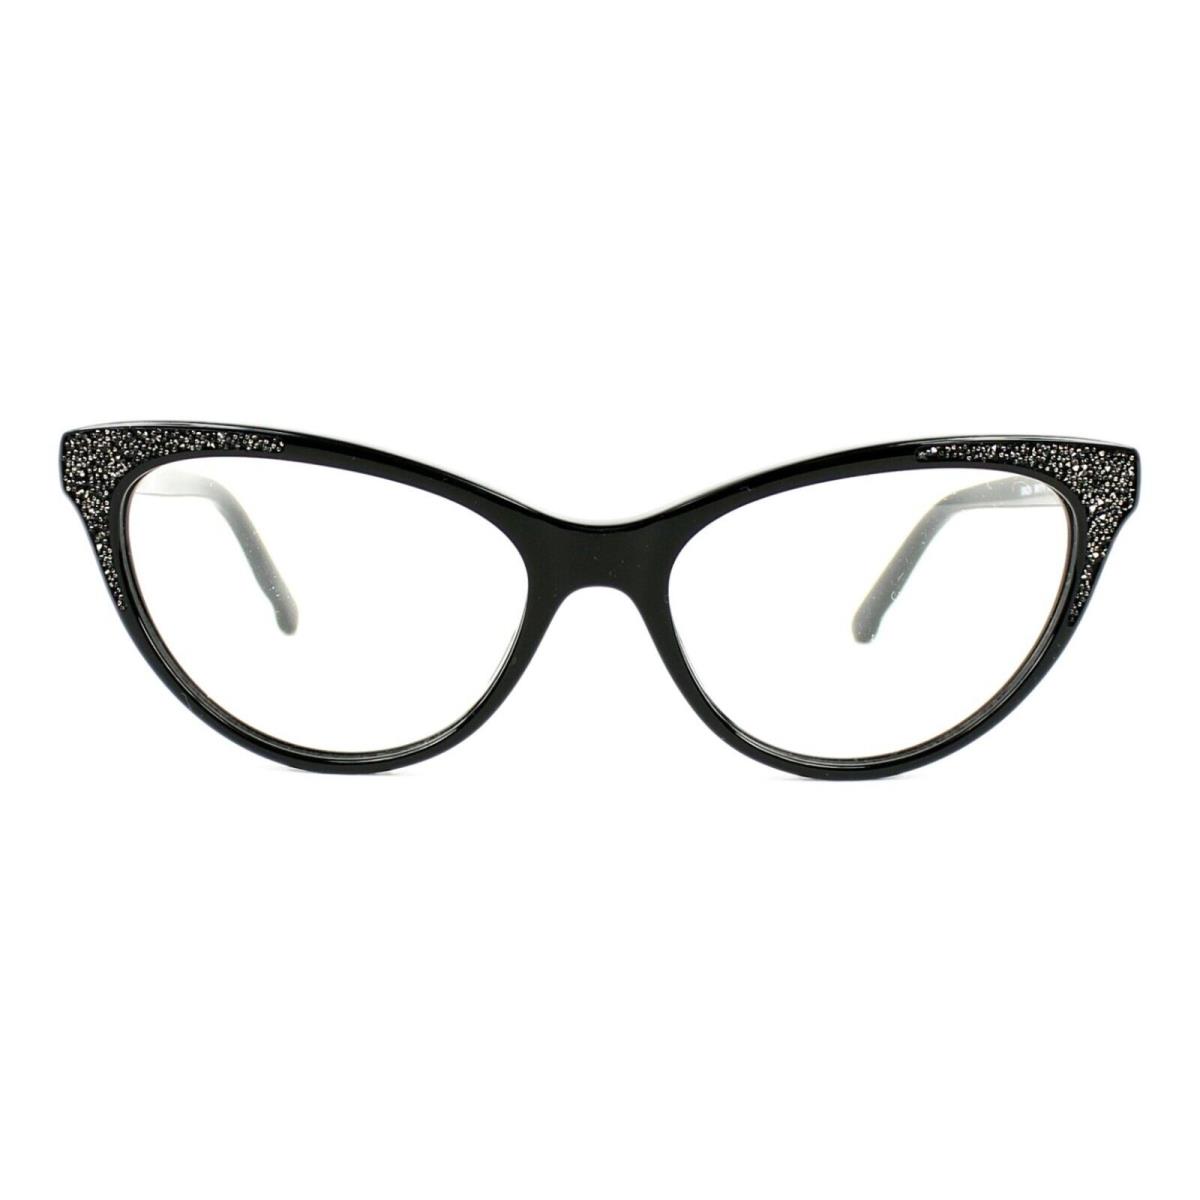 Swarovski Grazia SW 5174 001 Black Plastic Cat Eye Eyeglasses Frame 54-16-140